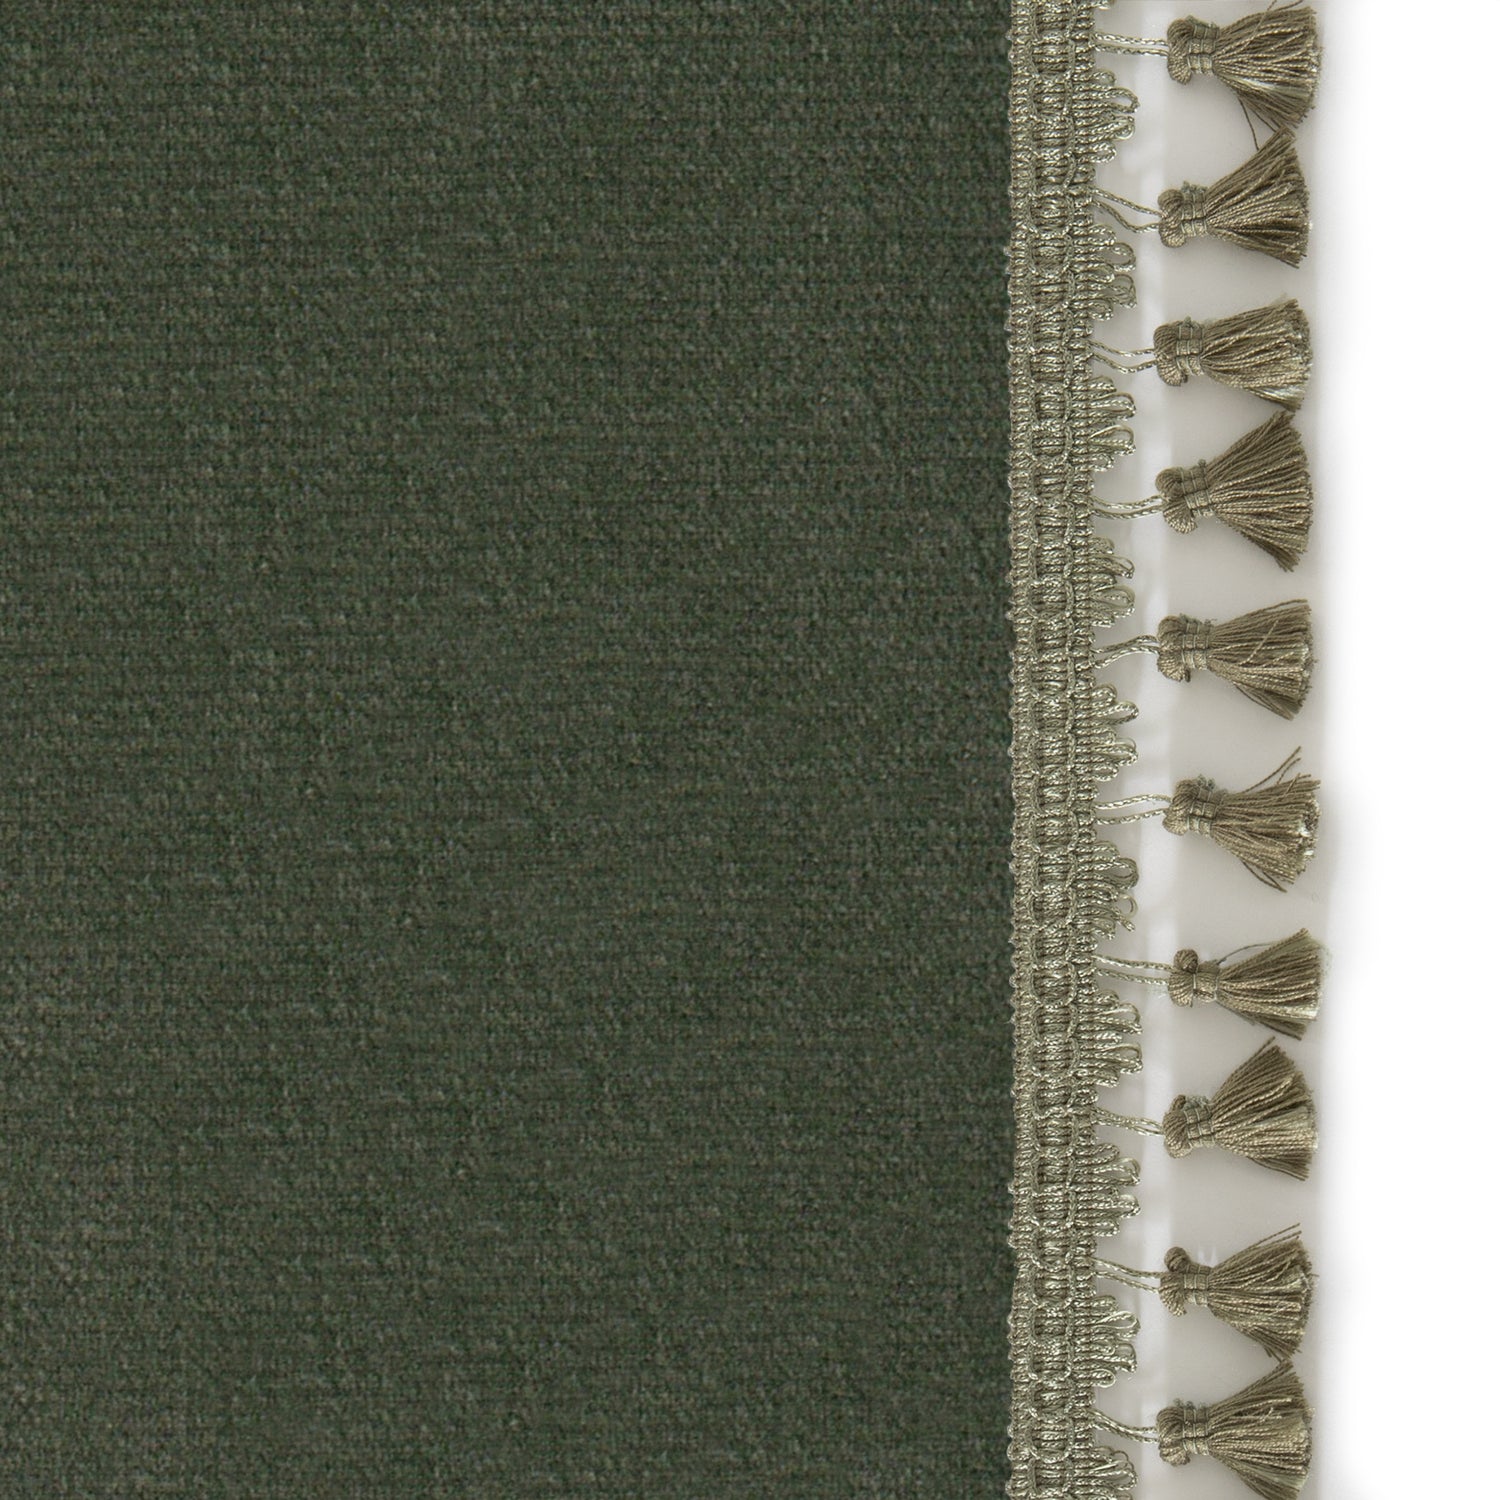 Upclose picture of Fern Velvet custom Fern Greencurtain with sage tassel trim